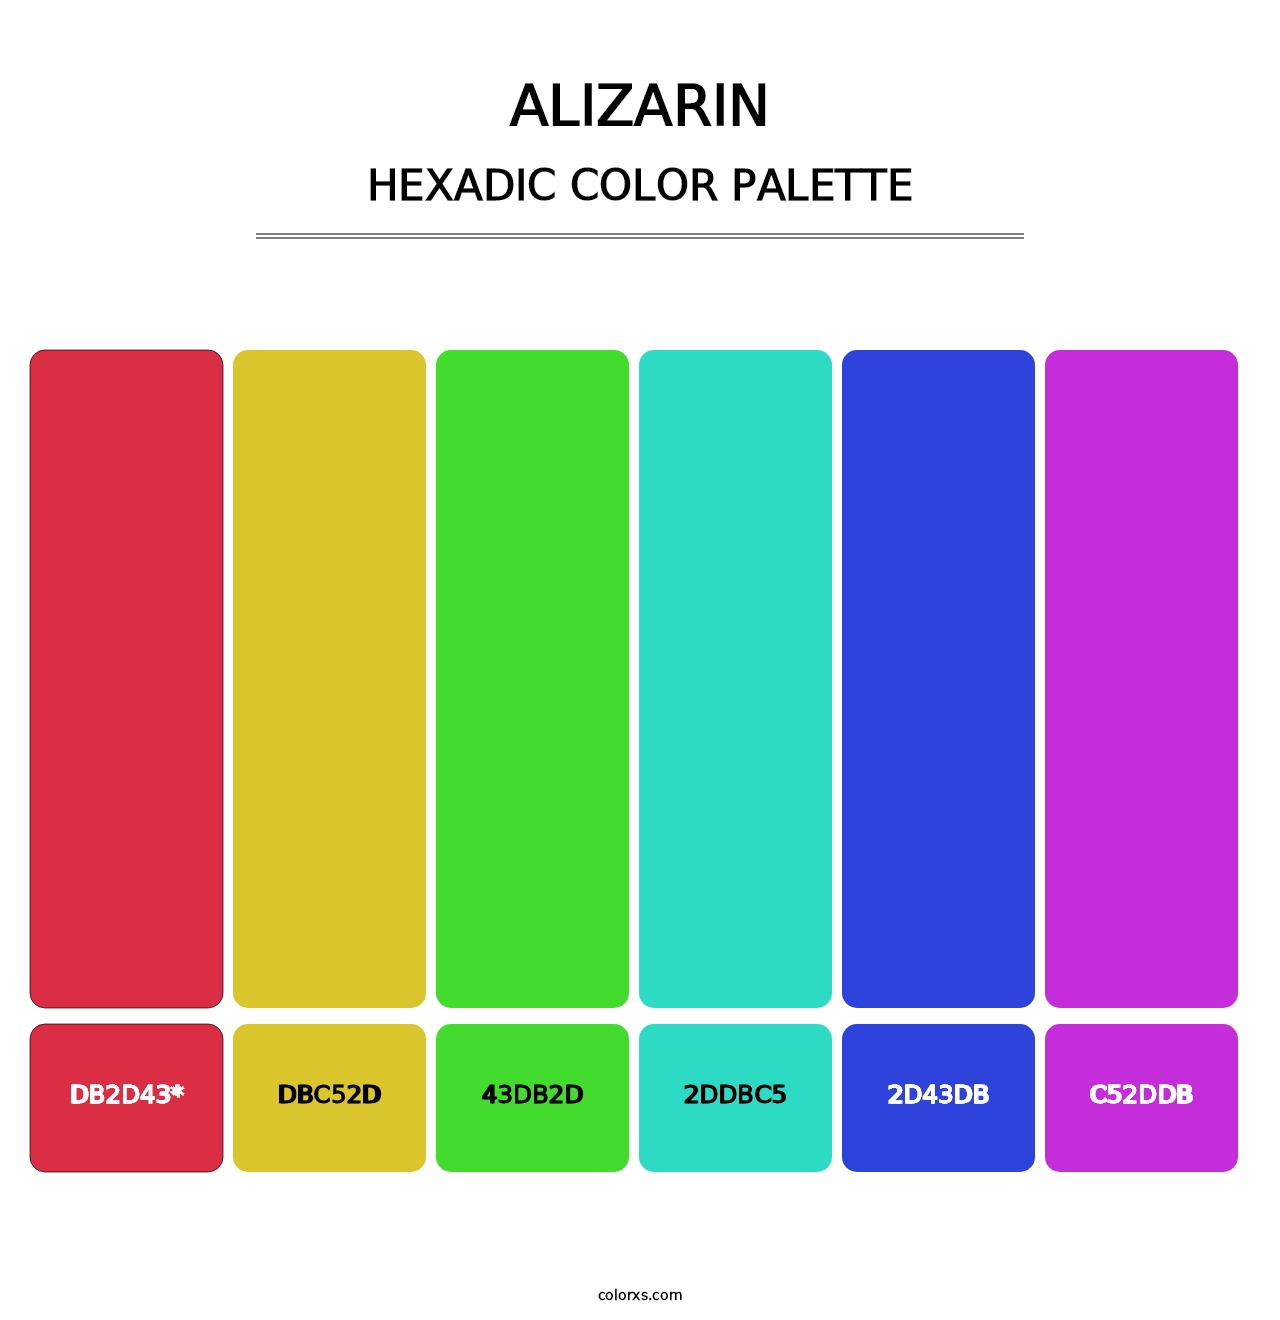 Alizarin - Hexadic Color Palette